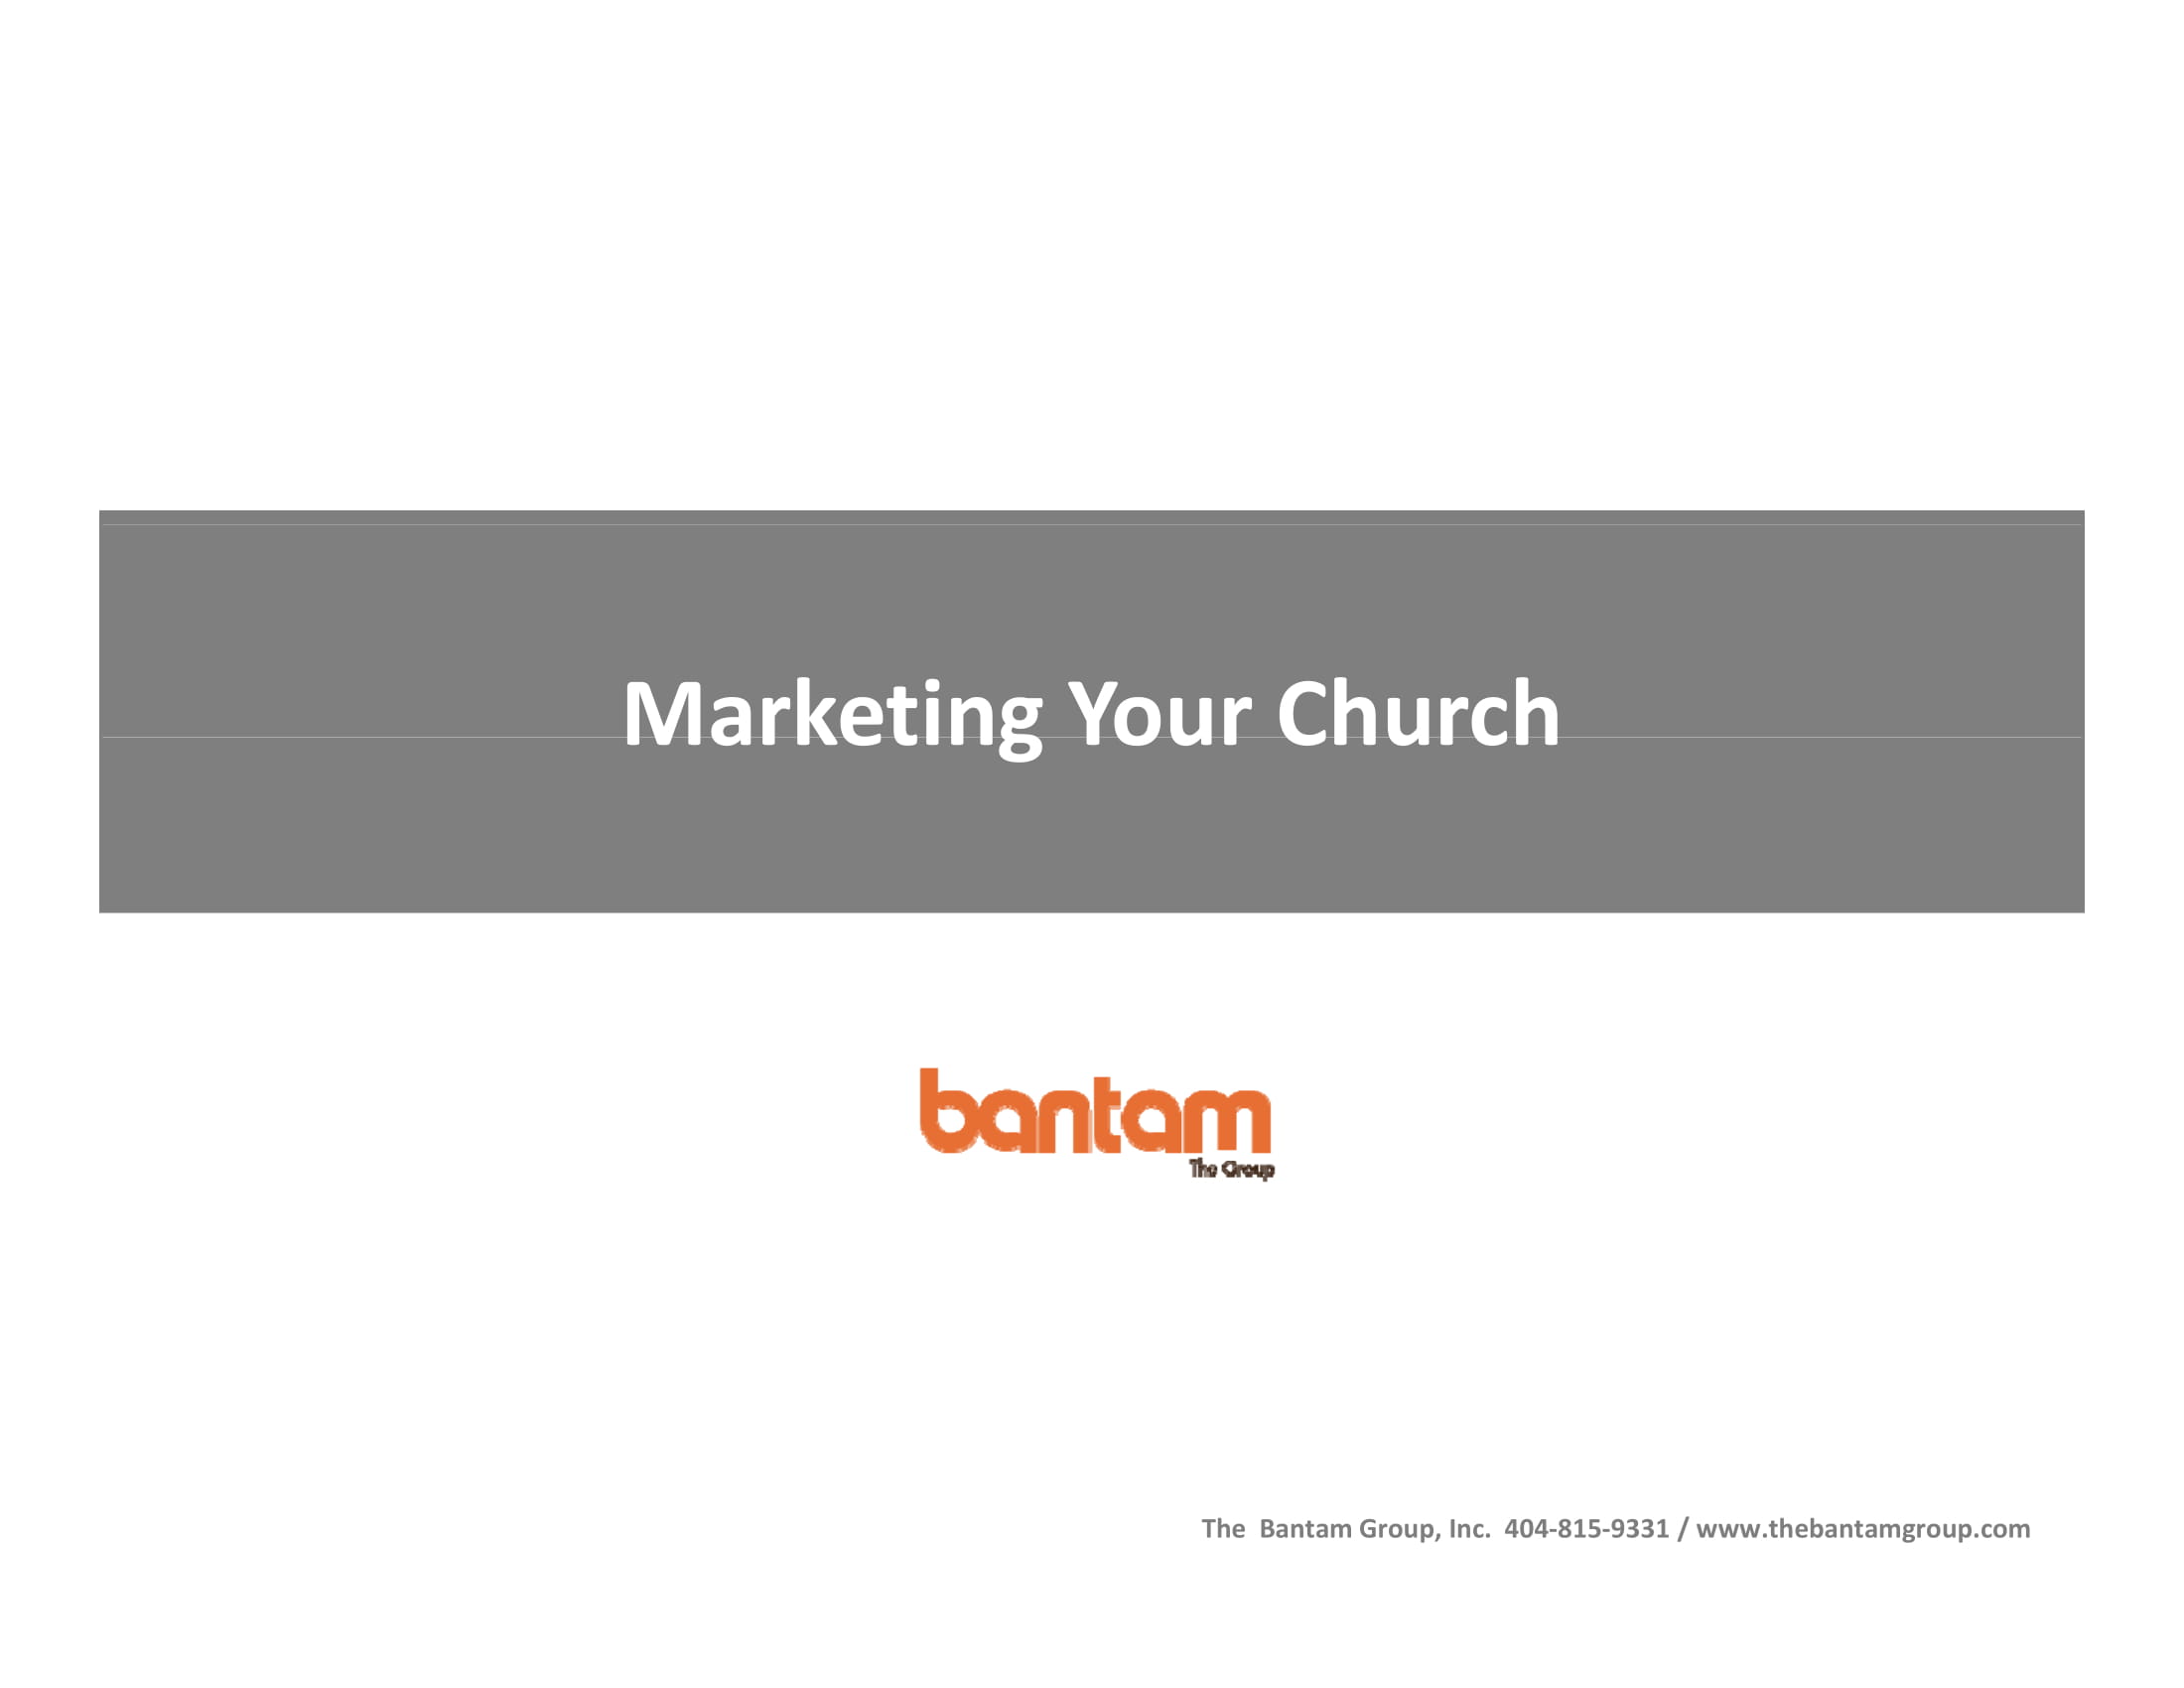 church marketing plan example 01